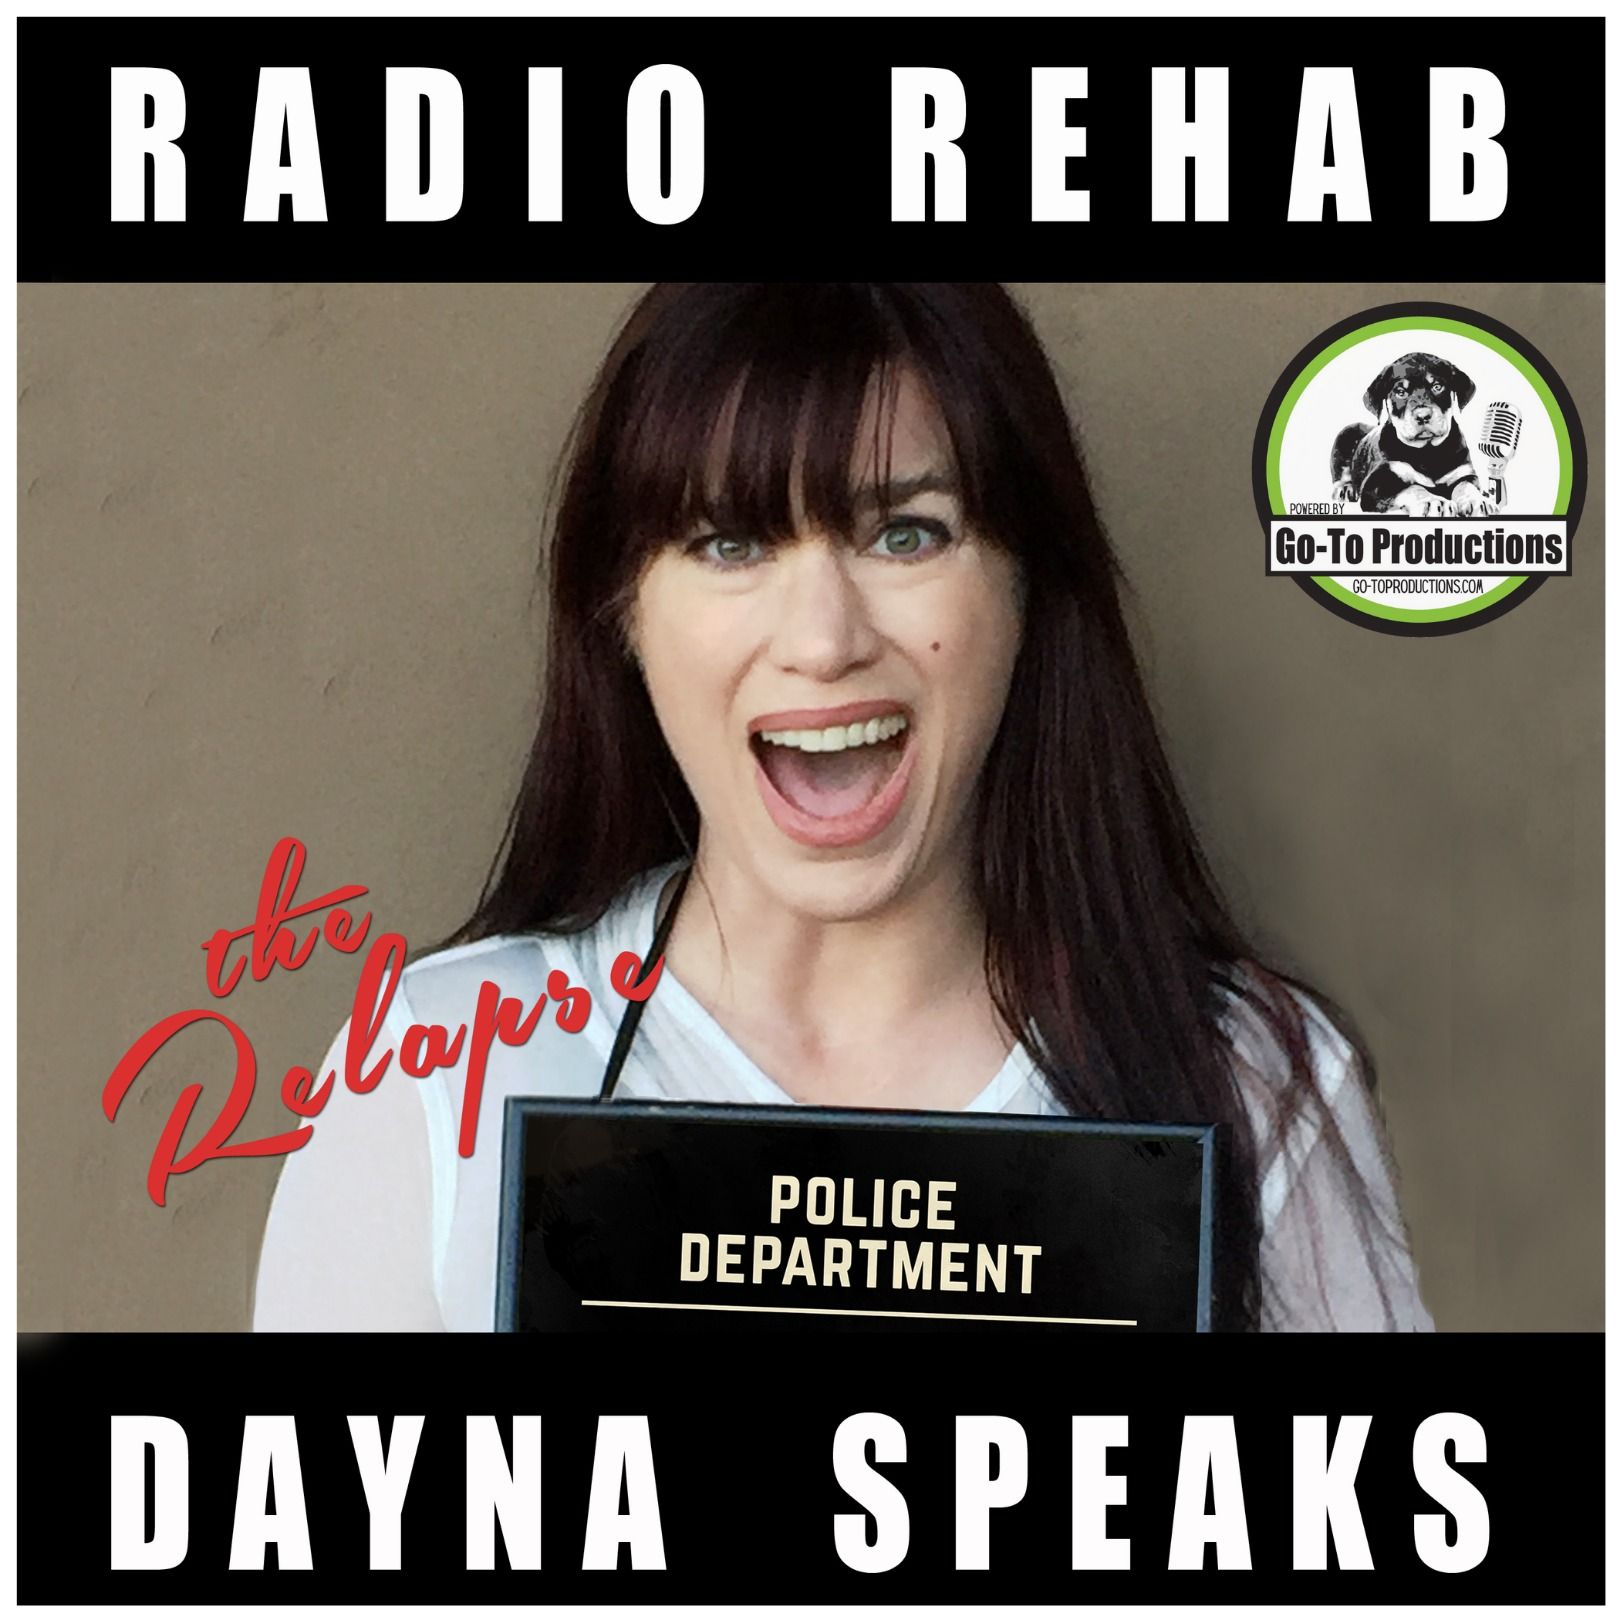 Radio Rehab with Dayna Keyes